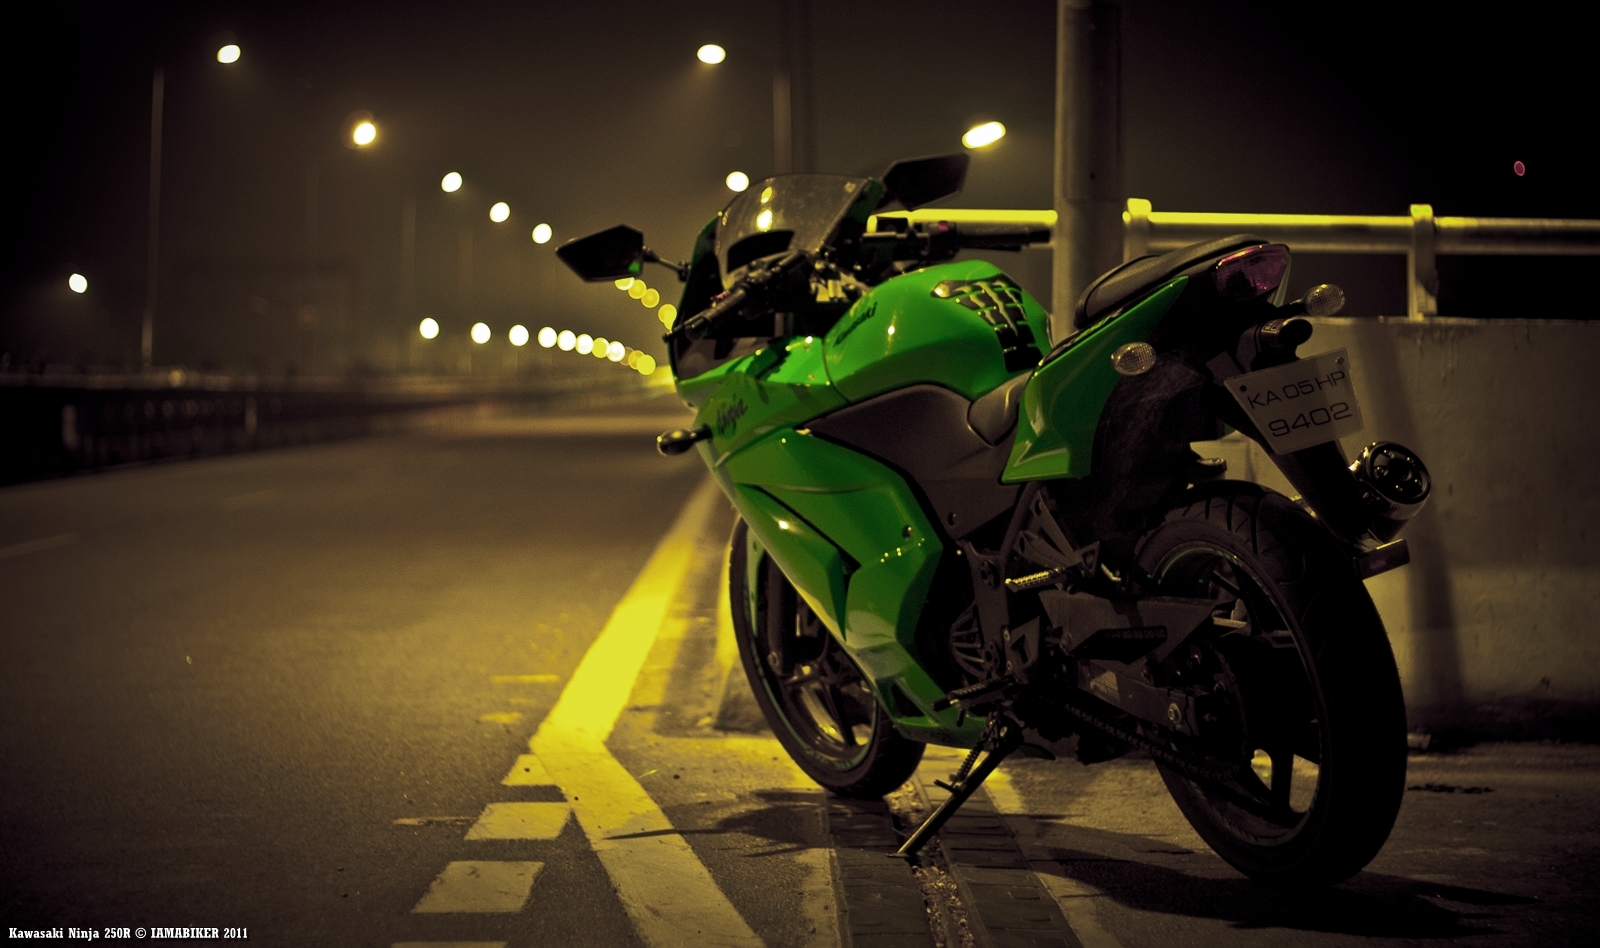 Ninja 250r Wallpaper Diwali Motorcycle